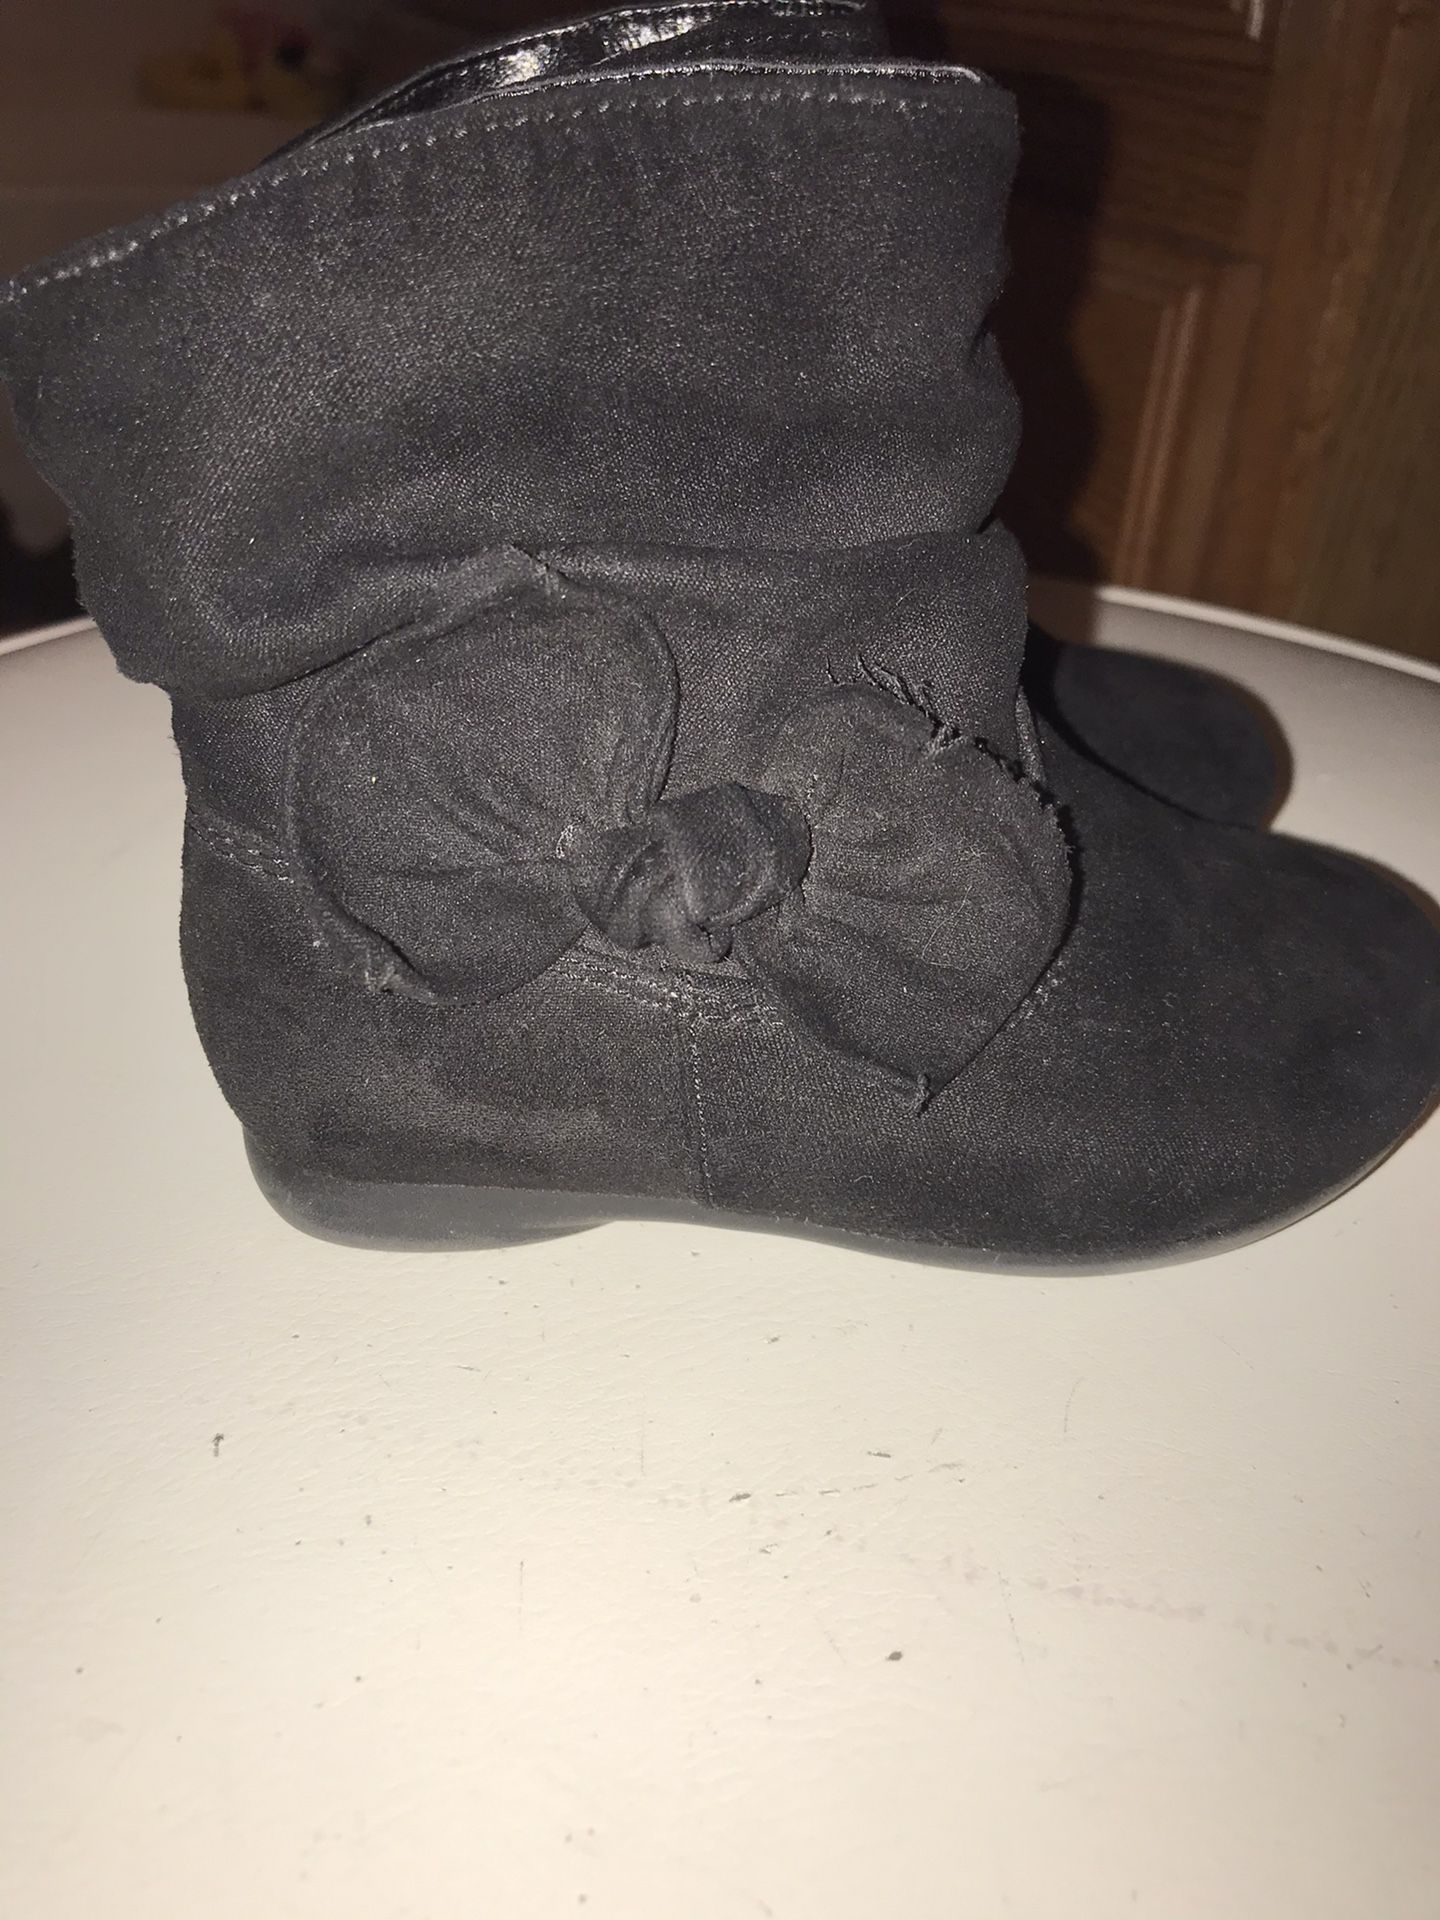 Toddler black boots